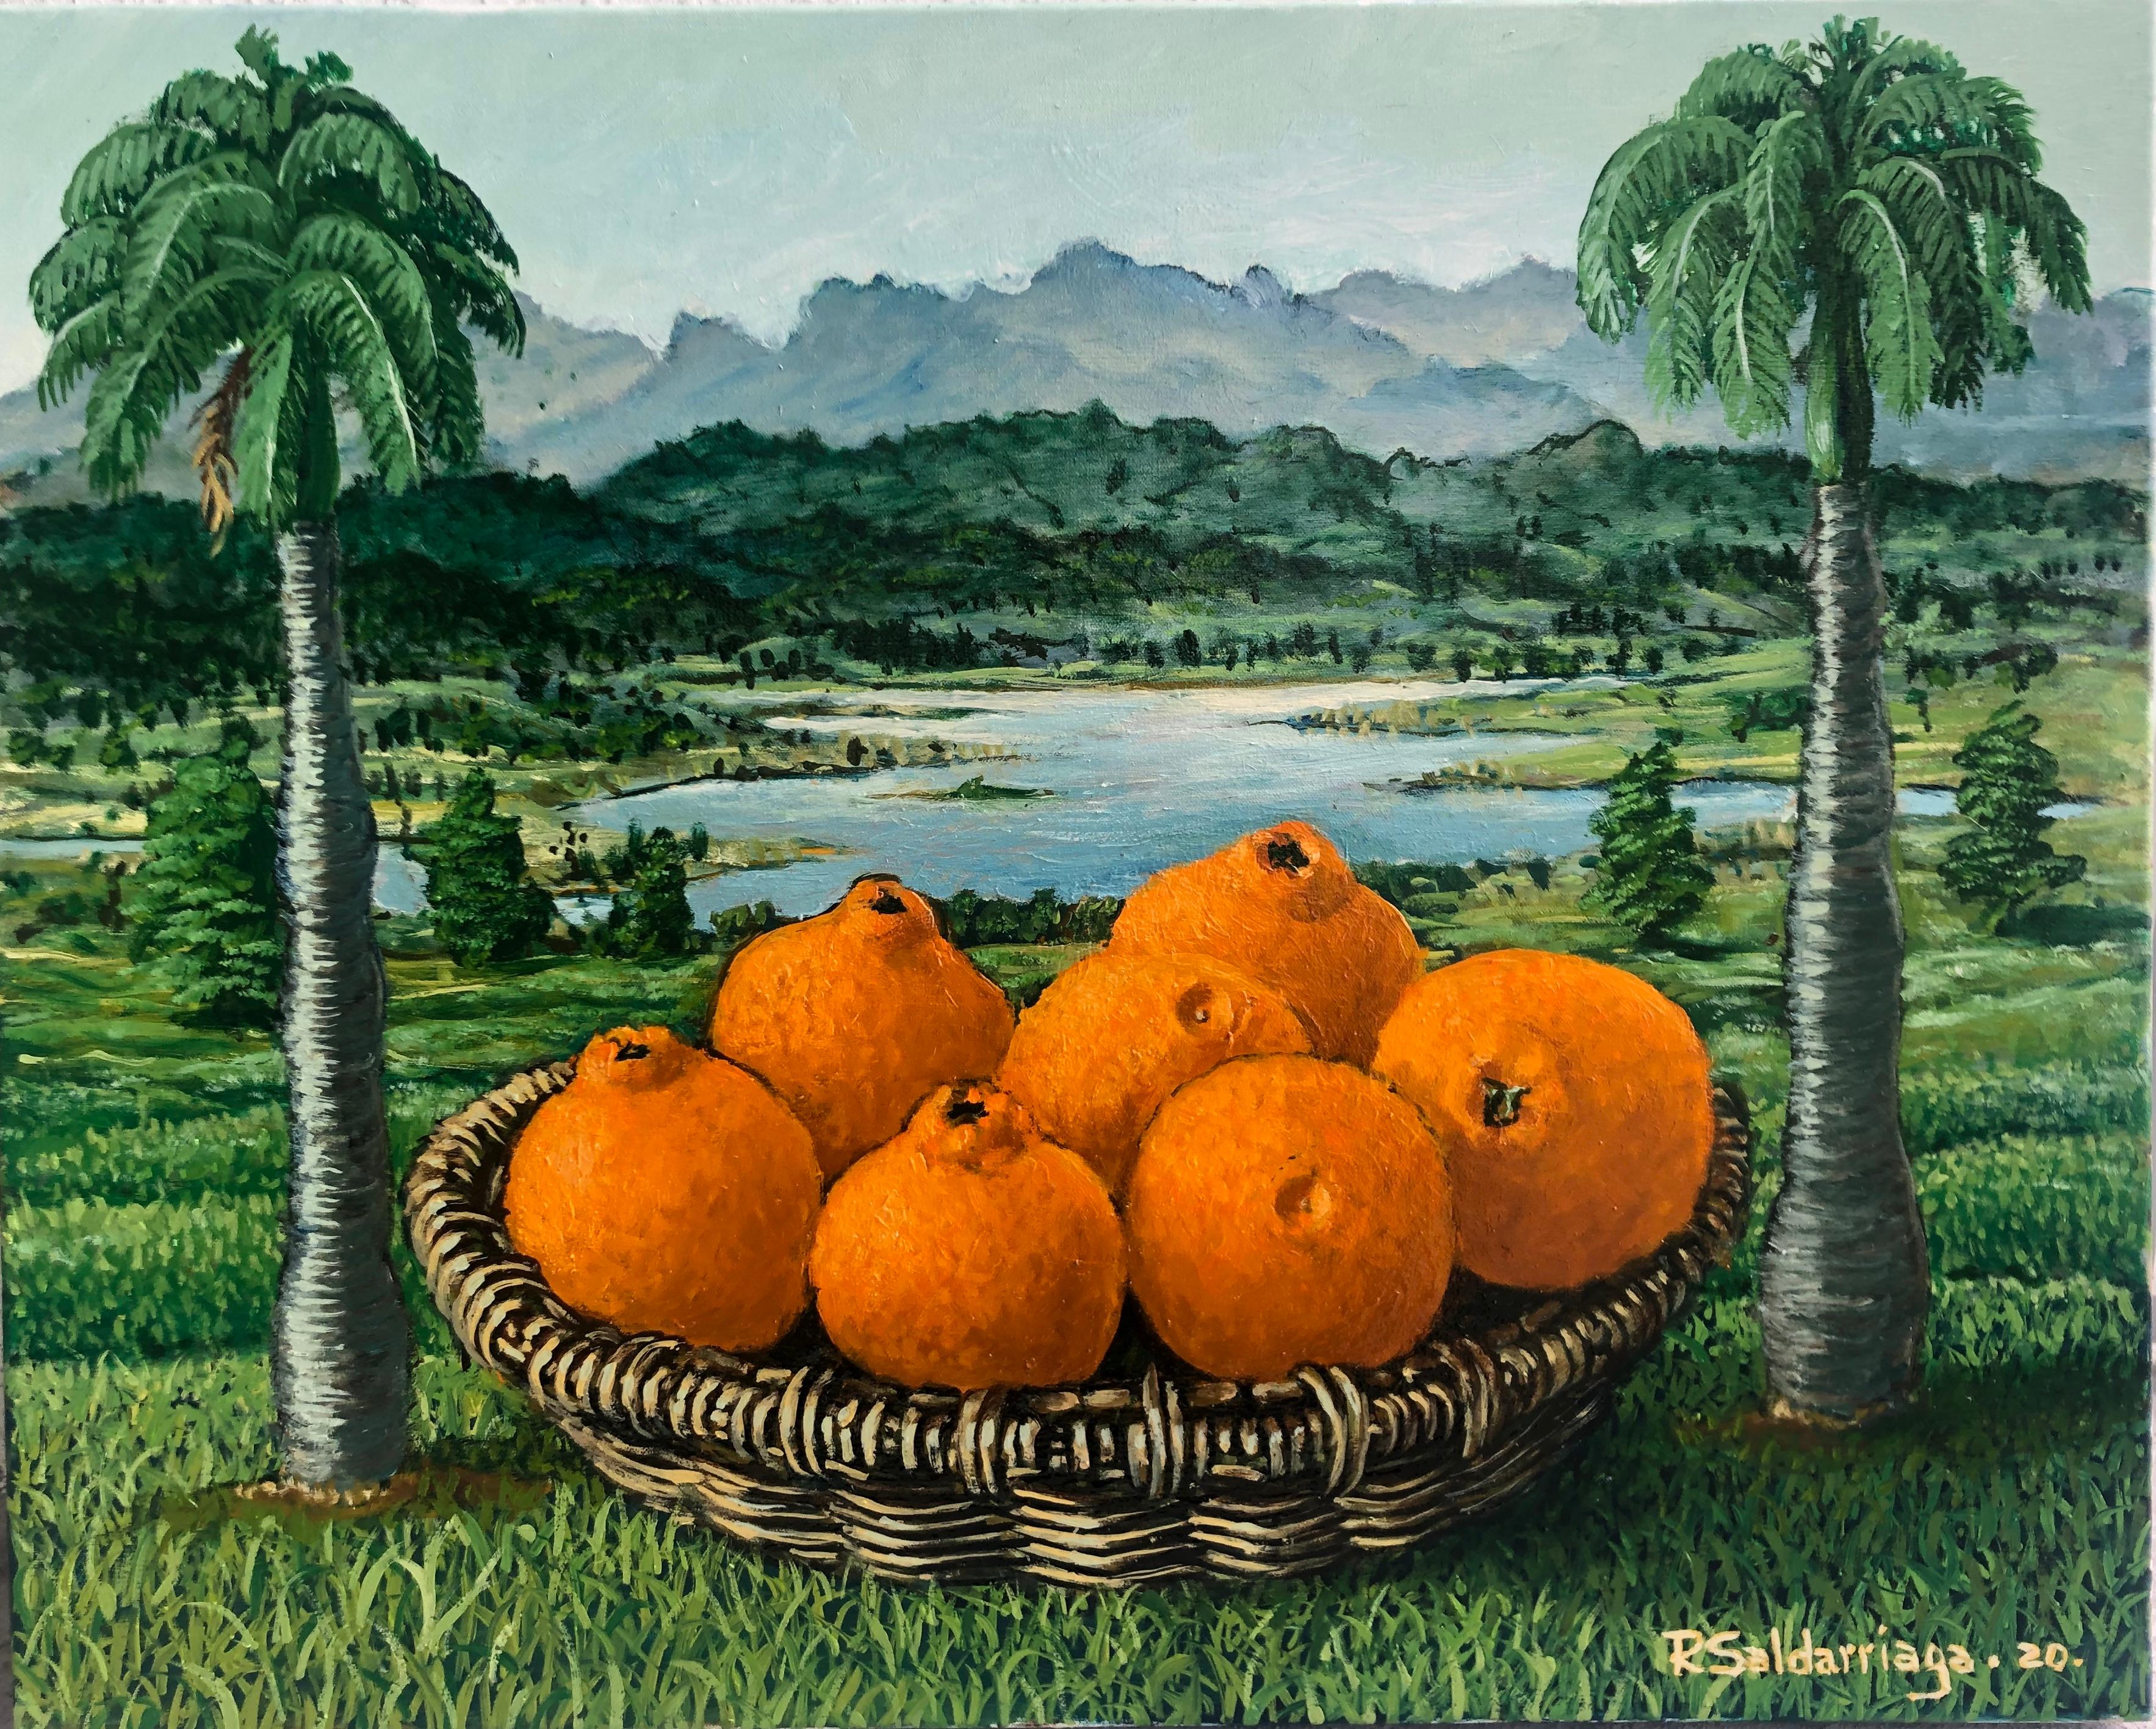 Rafael Saldarriaga Landscape Painting - Oranges In The Basket Between Palm Trees